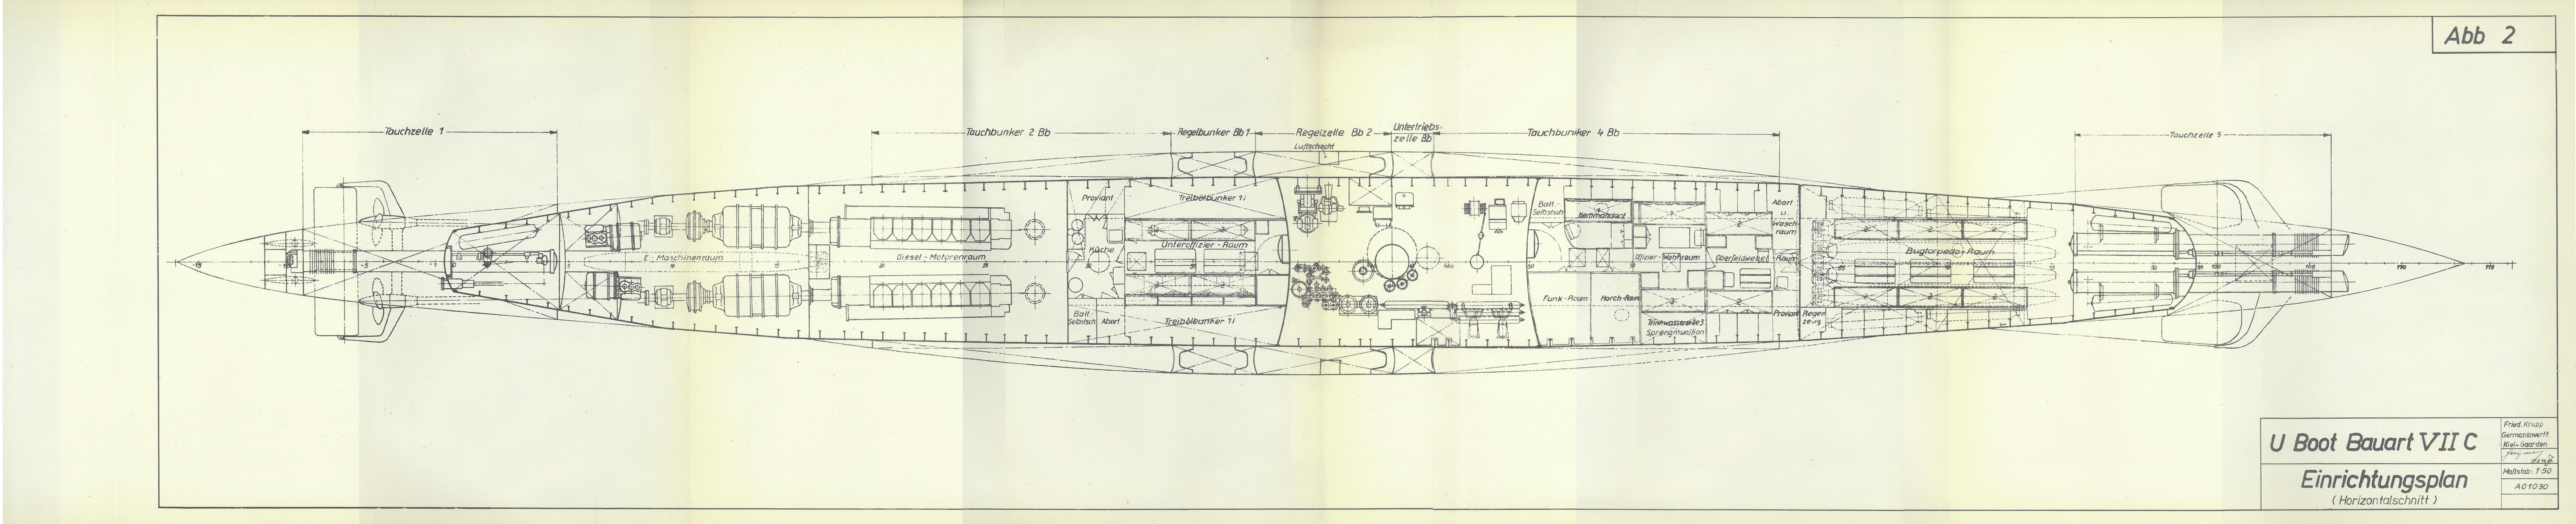 U-boat Archive - Manual Type VIIC